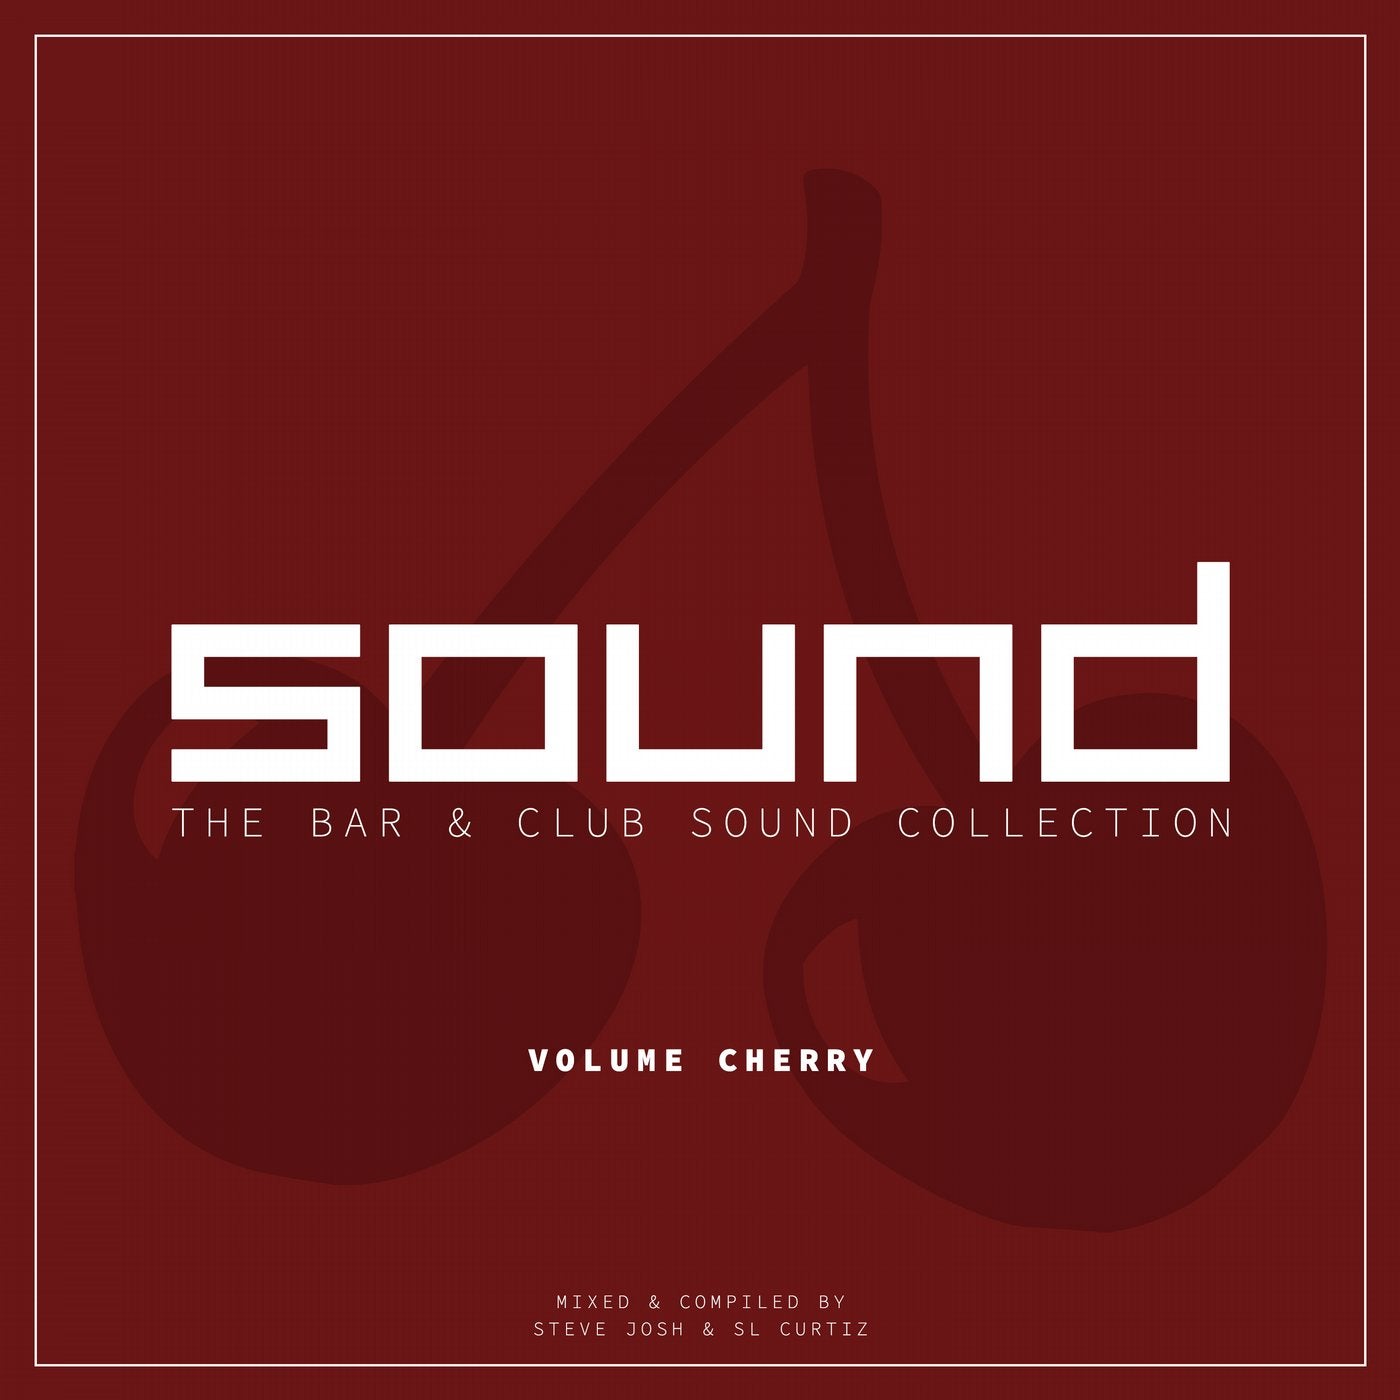 Sound collection. Sounds collection. Клуб Sound. Volume Cherry. Club Sound Karea.